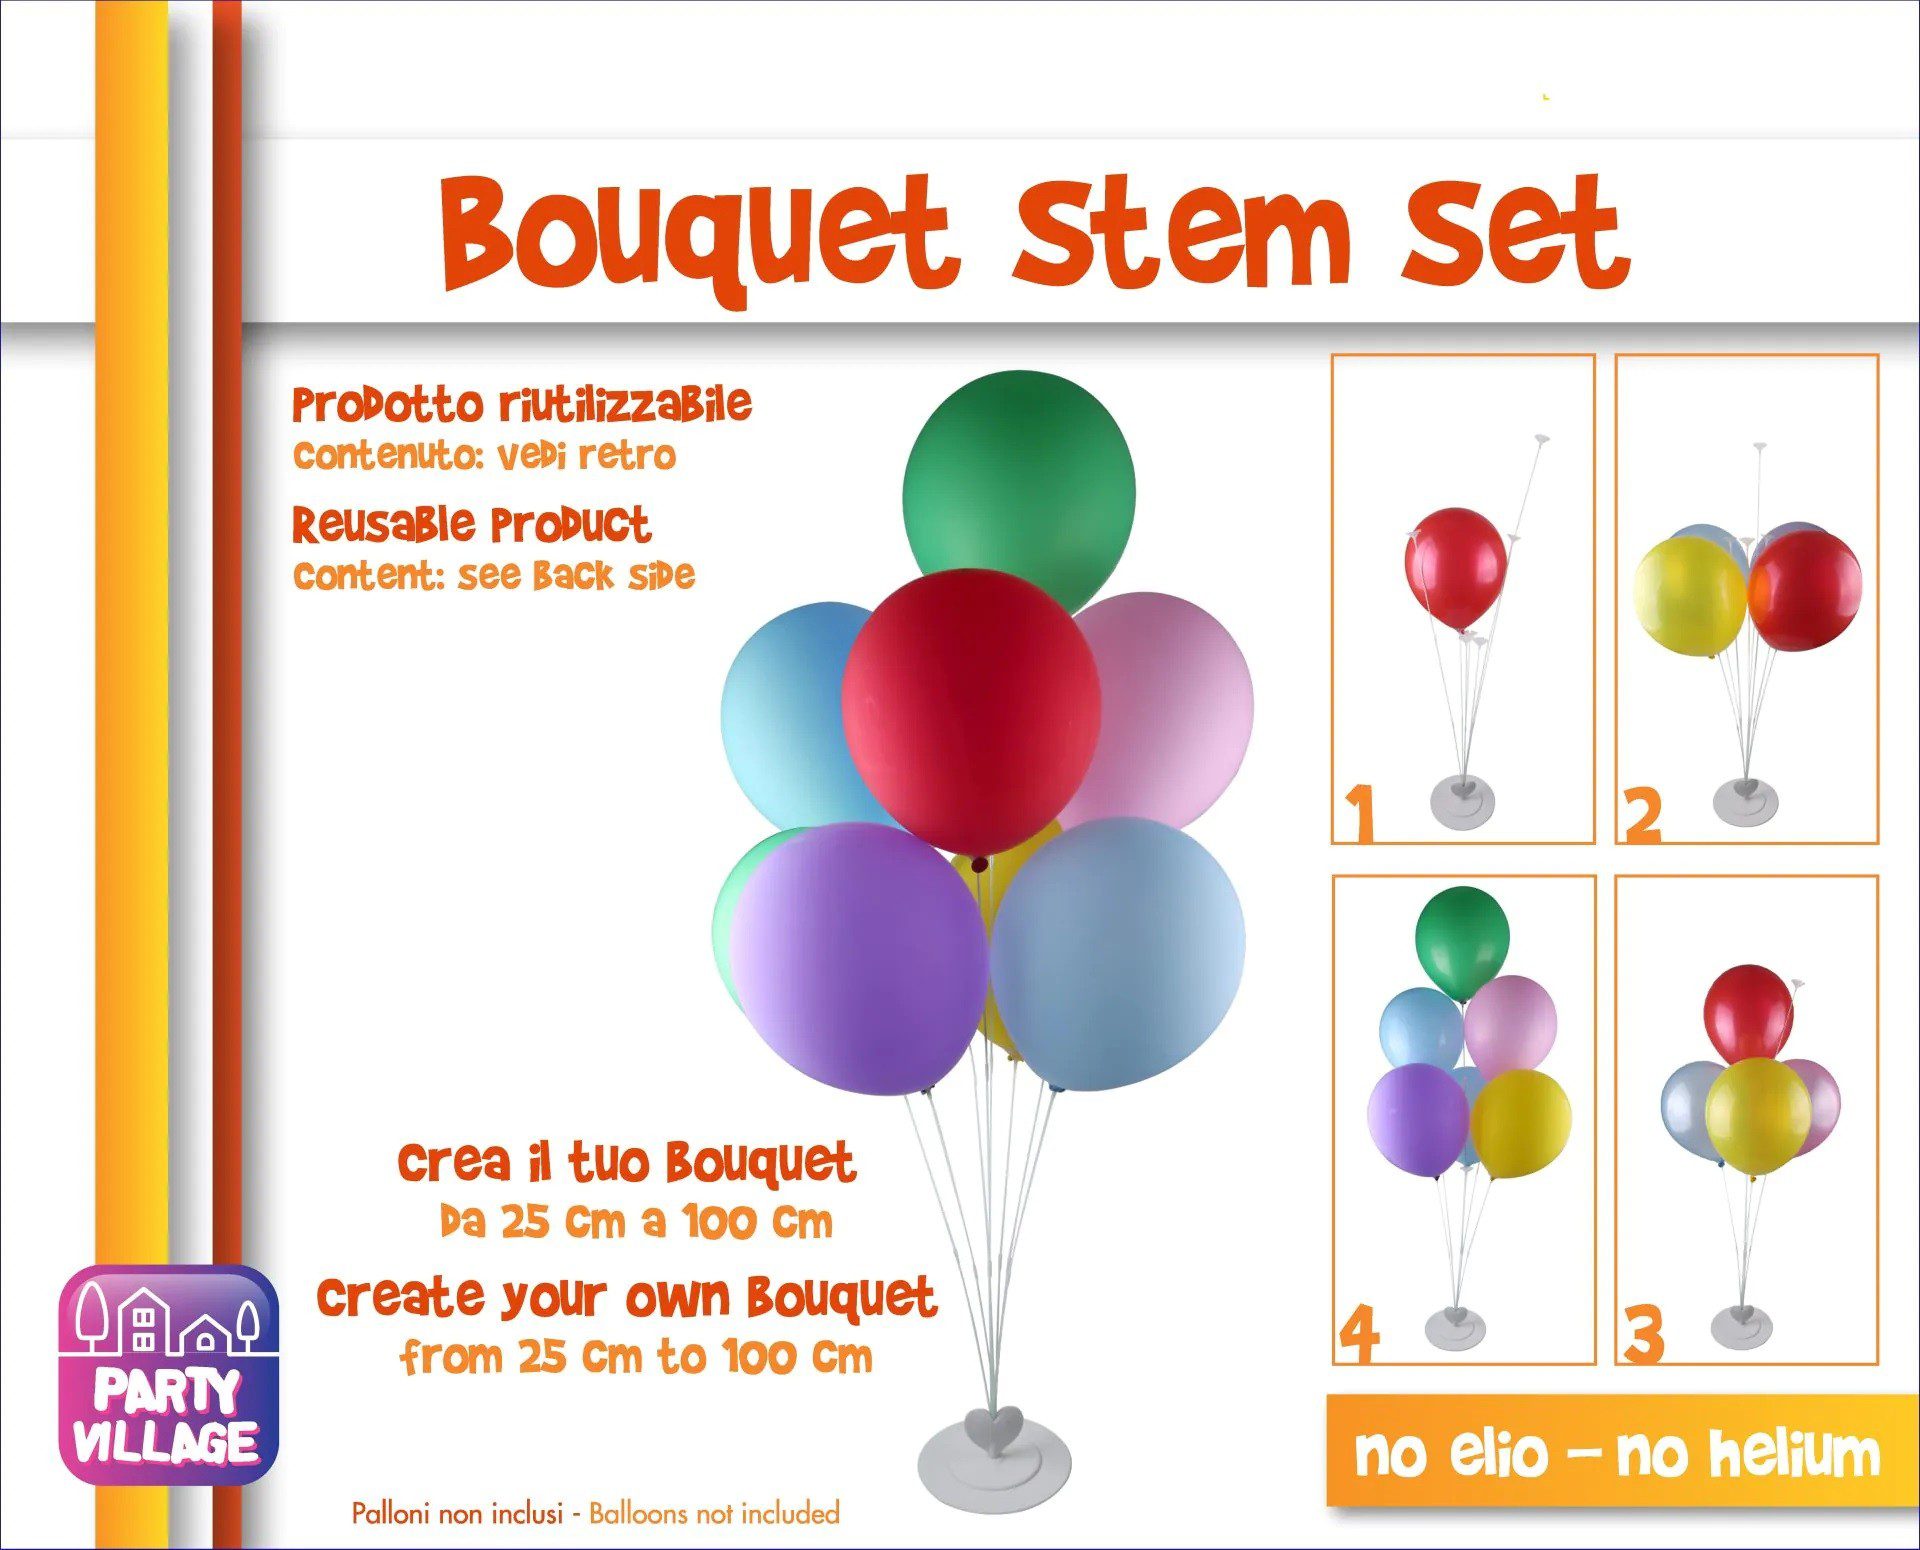 Bouquet Stem Set: componi il tuo bouquet di palloncini